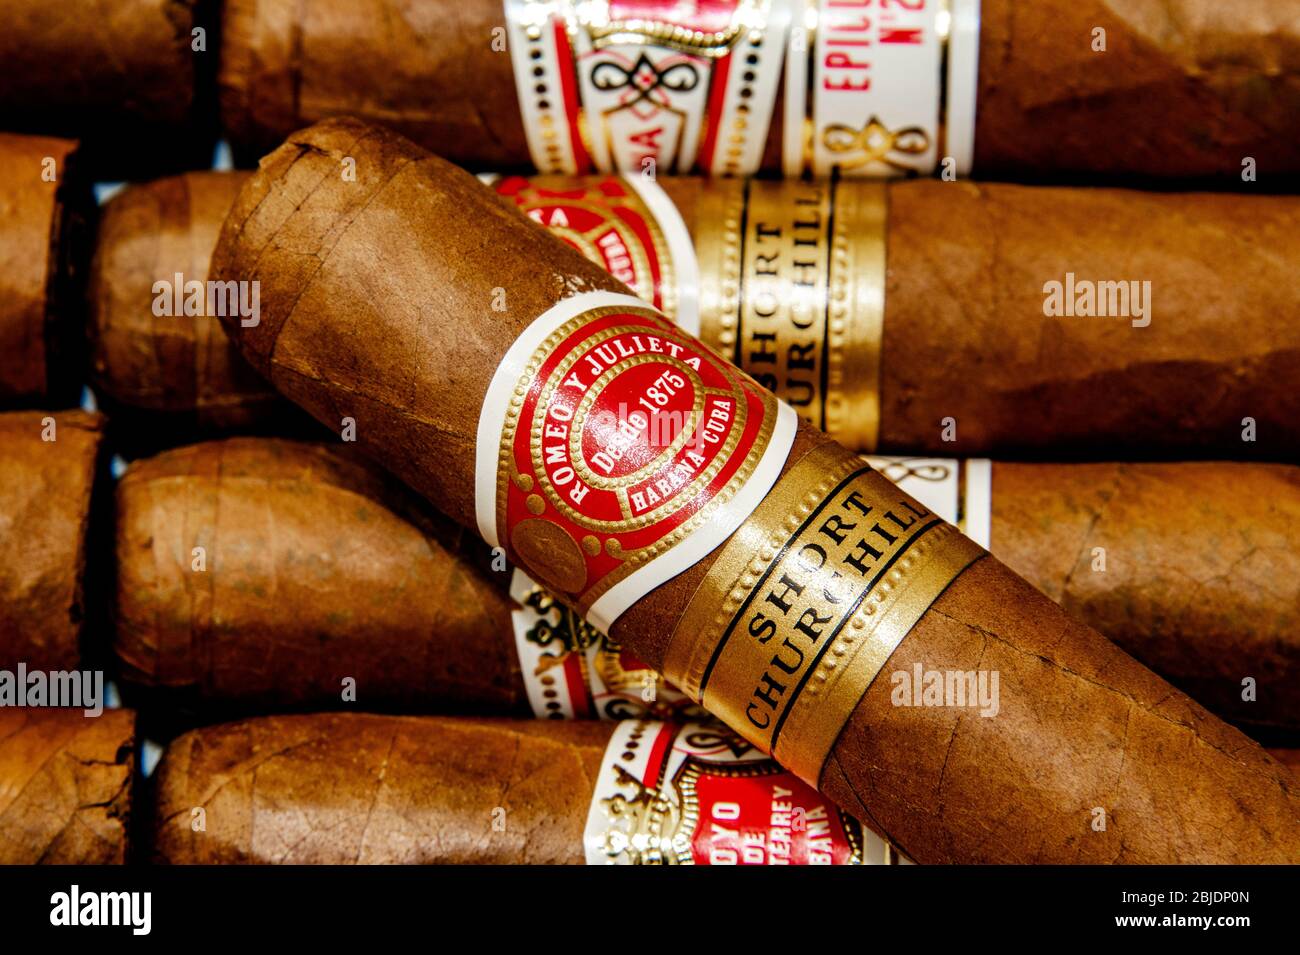 https://c8.alamy.com/compit/2bjdp0n/sigari-sigari-cubani-romeo-y-julieta-e-hoyo-de-monterrey-prodotto-tradizionale-di-tabacco-laminato-a-mano-sfondo-bianco-2bjdp0n.jpg